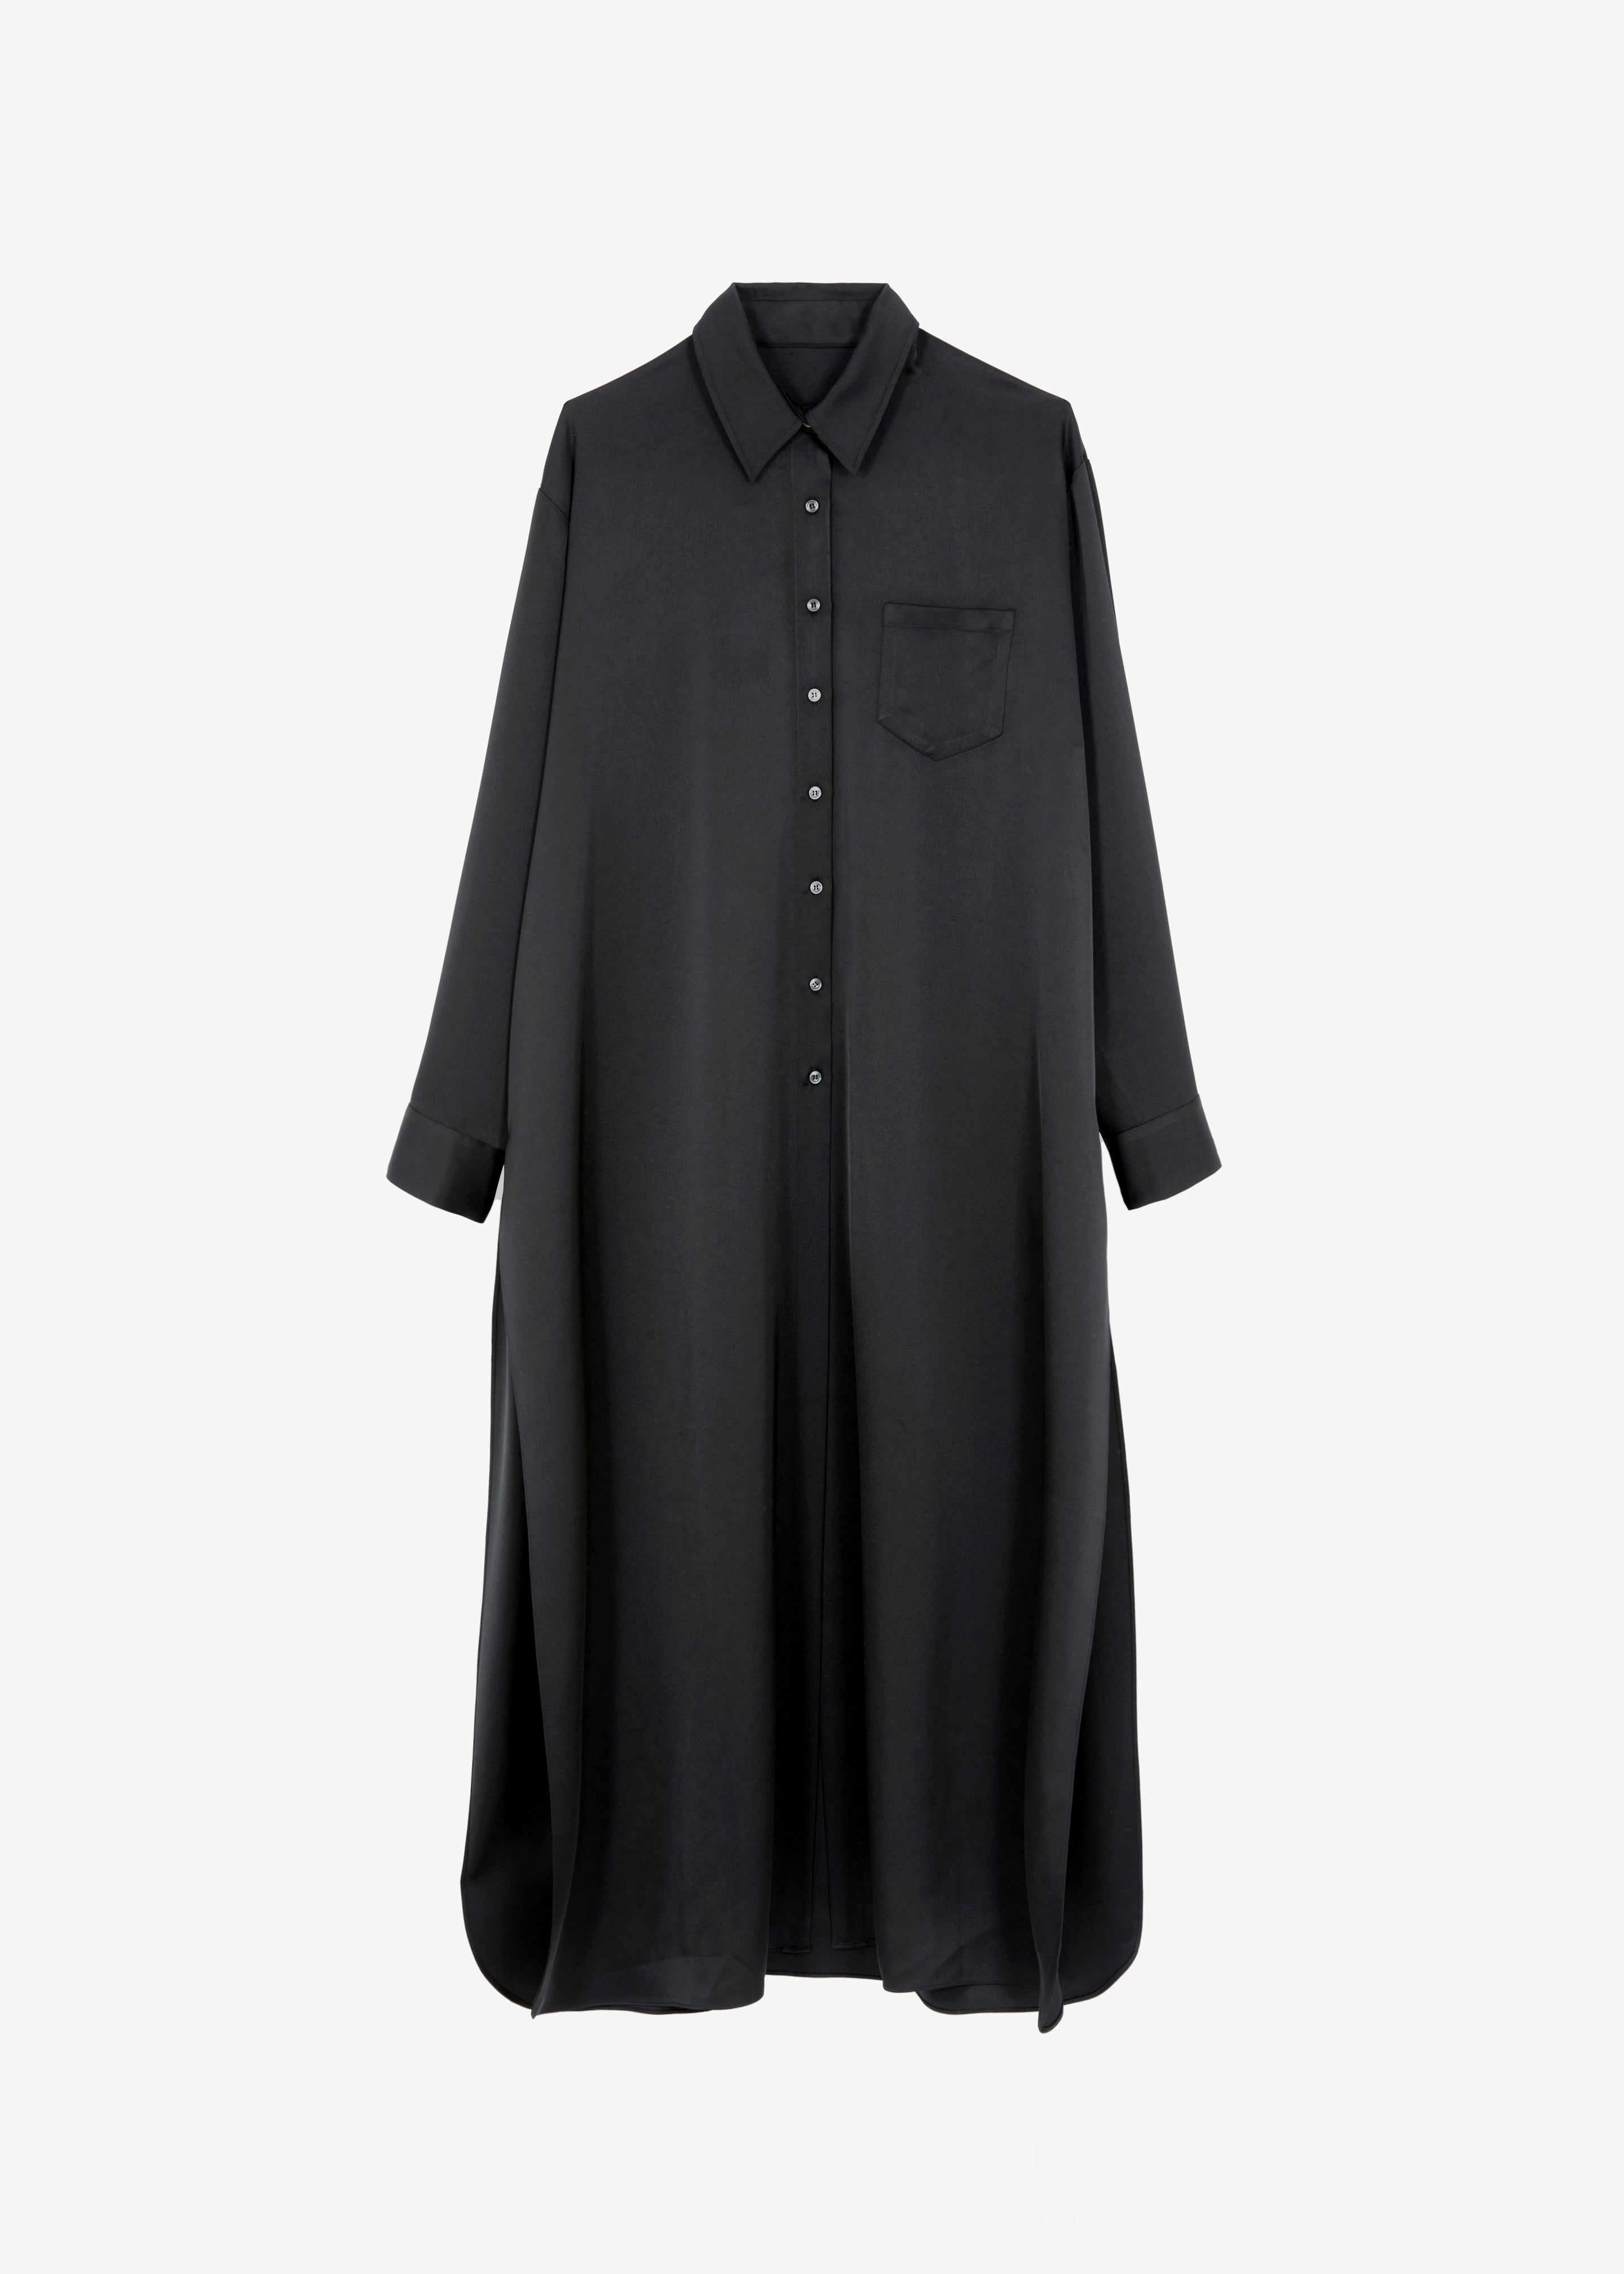 Avery Satin Shirt Dress - Black - 14